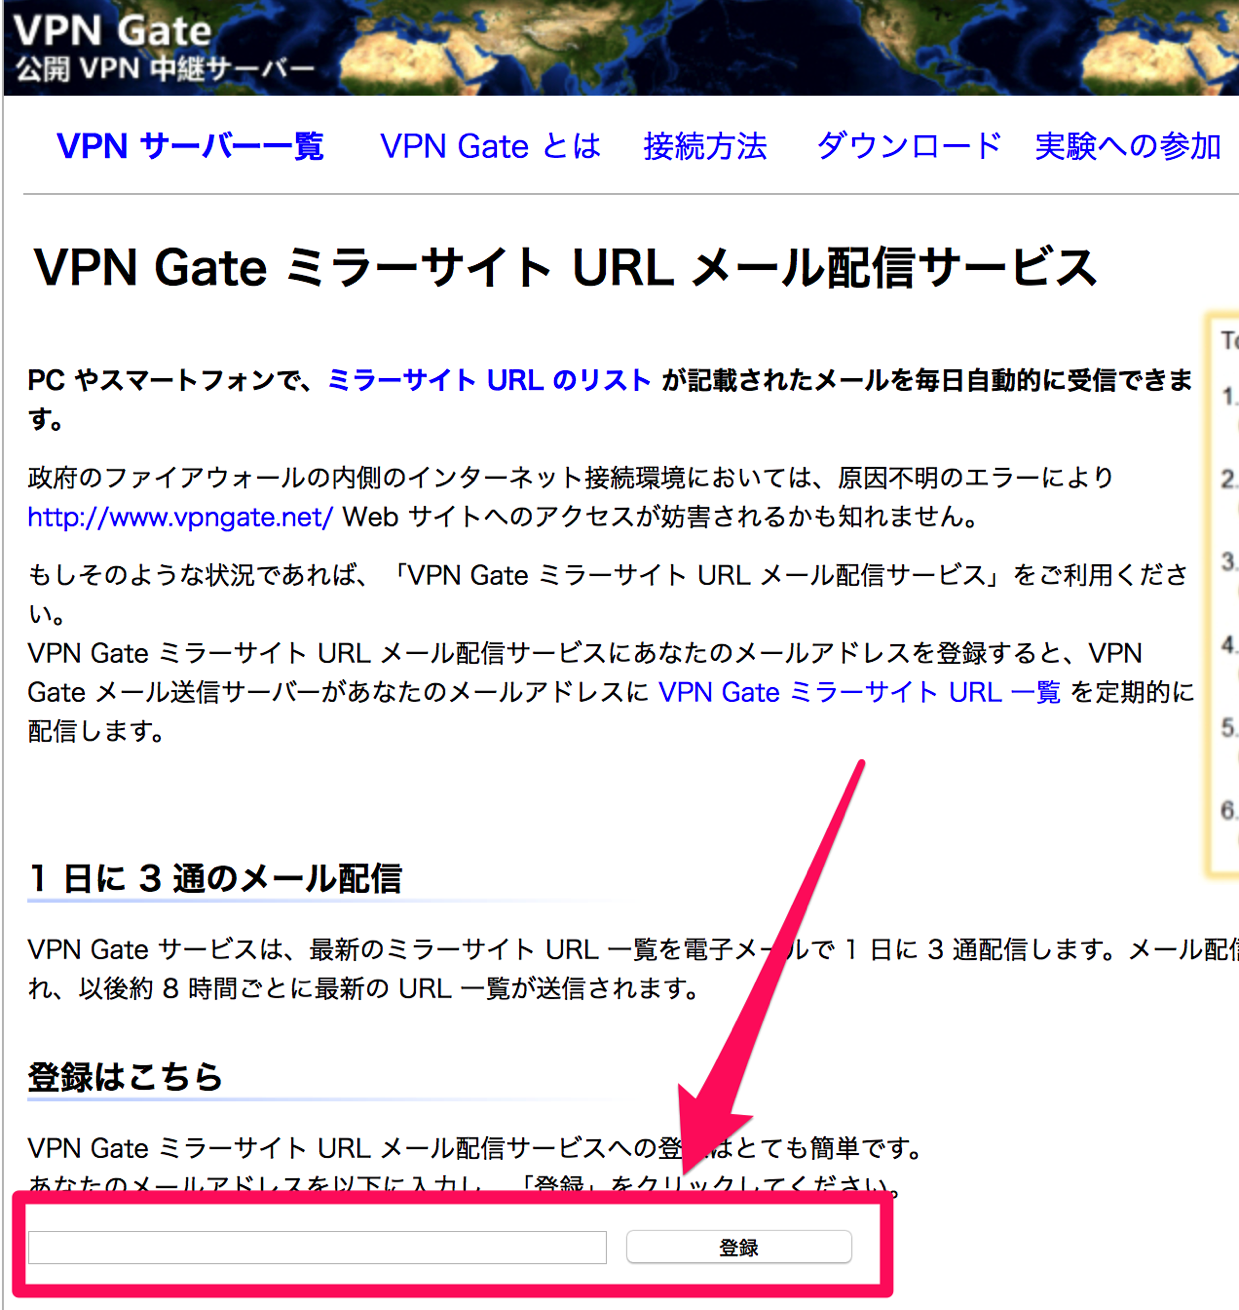 VPN Gate ミラーサイト URL メール配信サービス